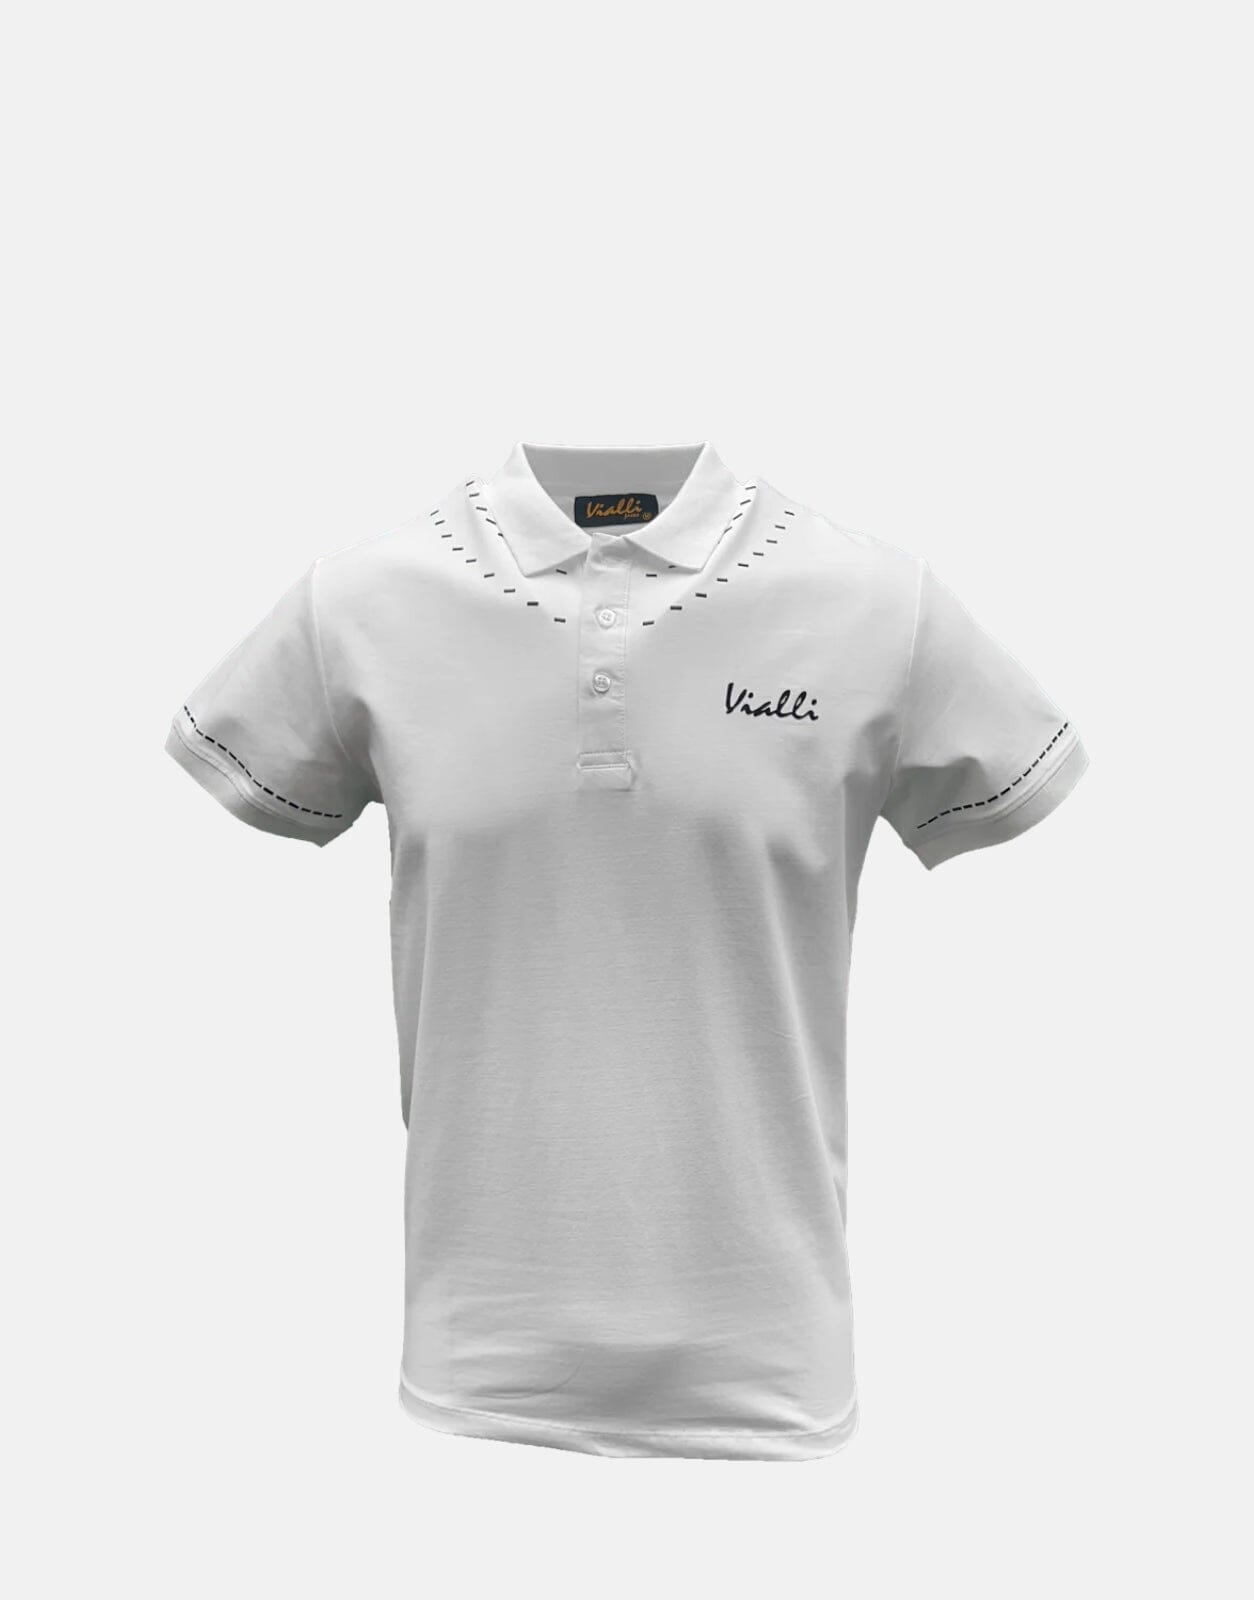 Vialli Flames White Polo Shirt - Subwear